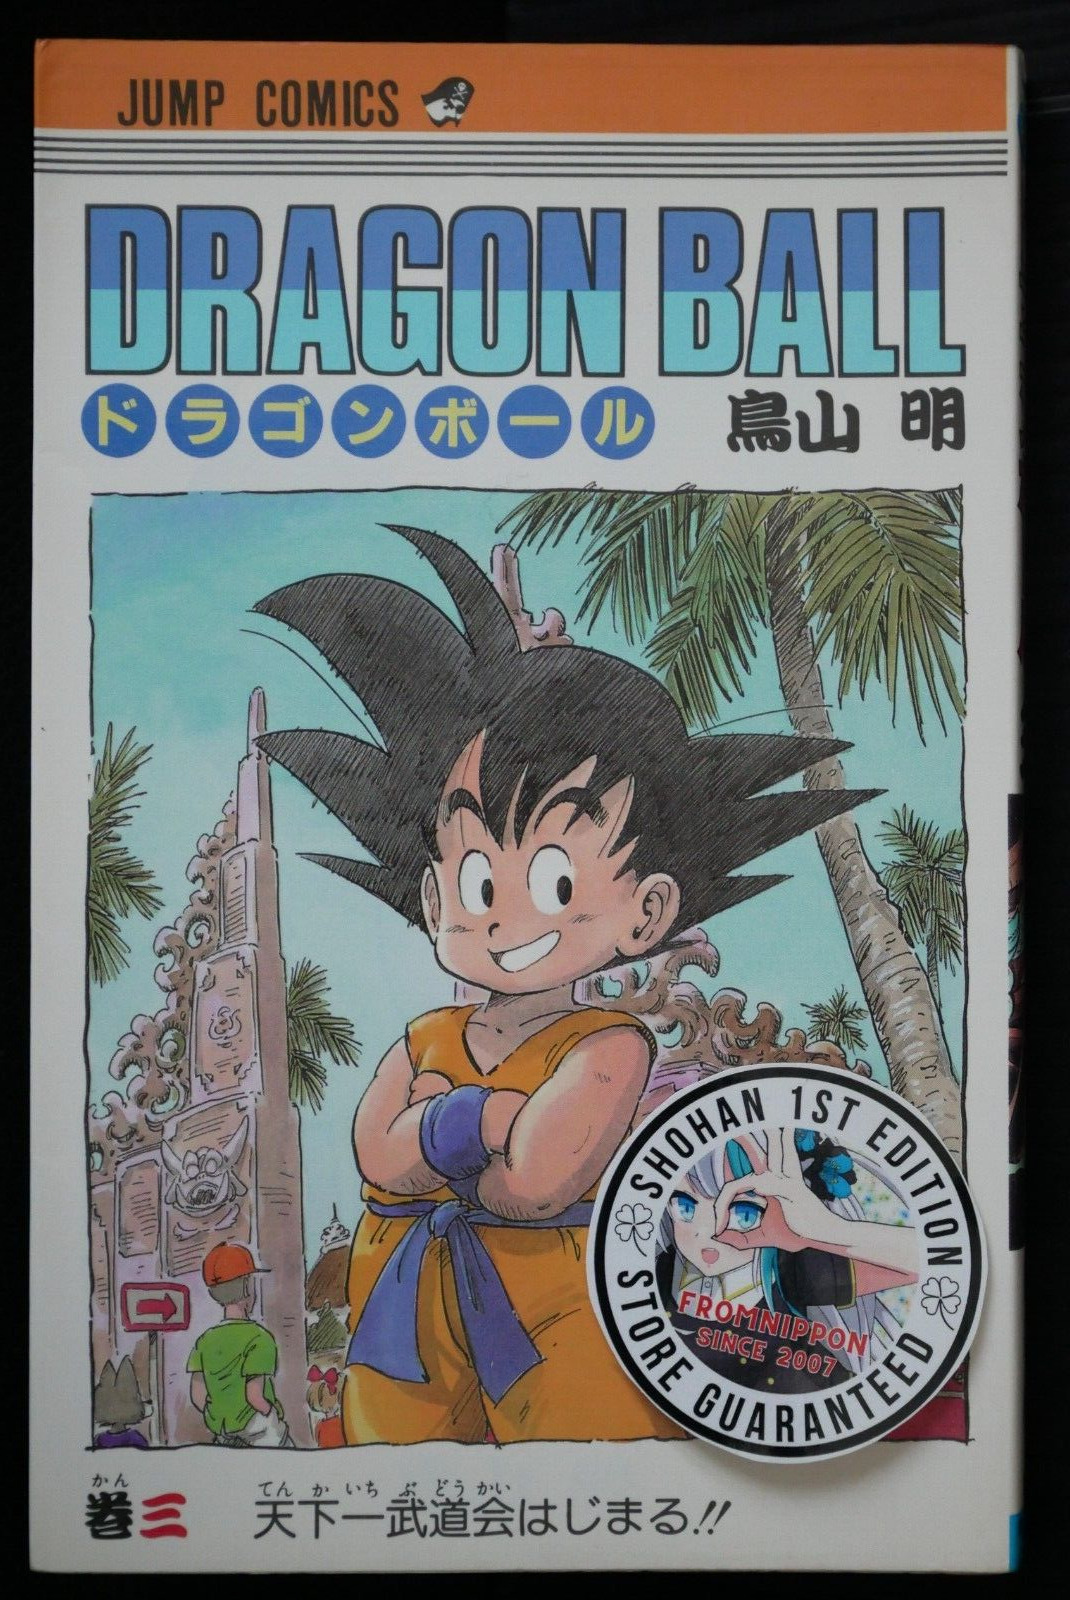 SHOHAN (1st Edition): Dragon Ball Vol.3 Manga by Akira Toriyama (3-1)